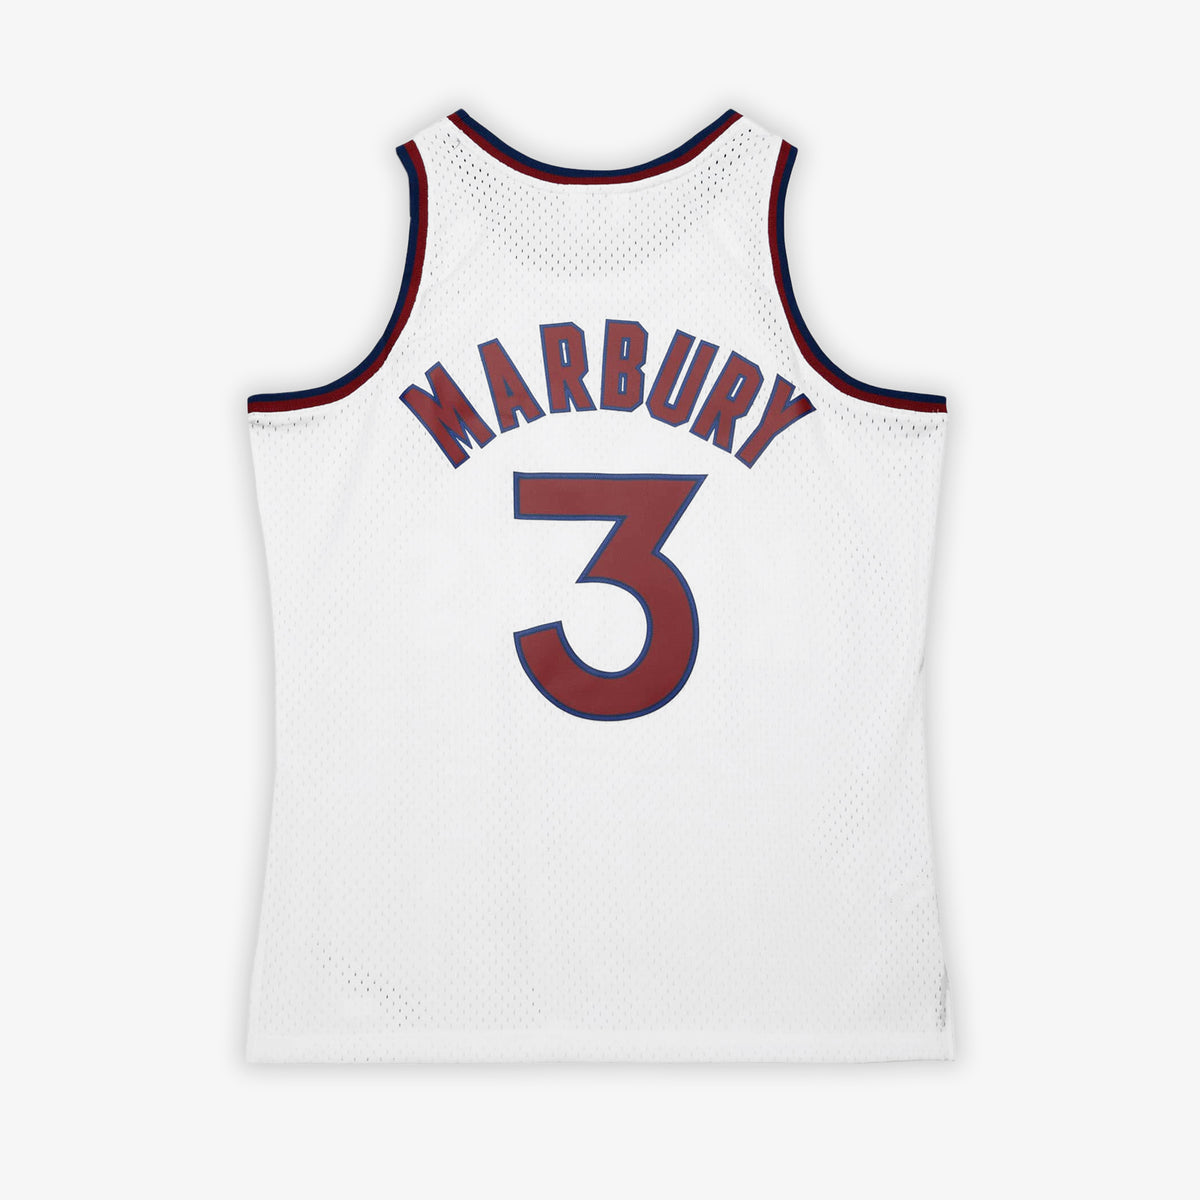 Stephon Marbury Basketball Jersey Mens XL XXL Blue 3